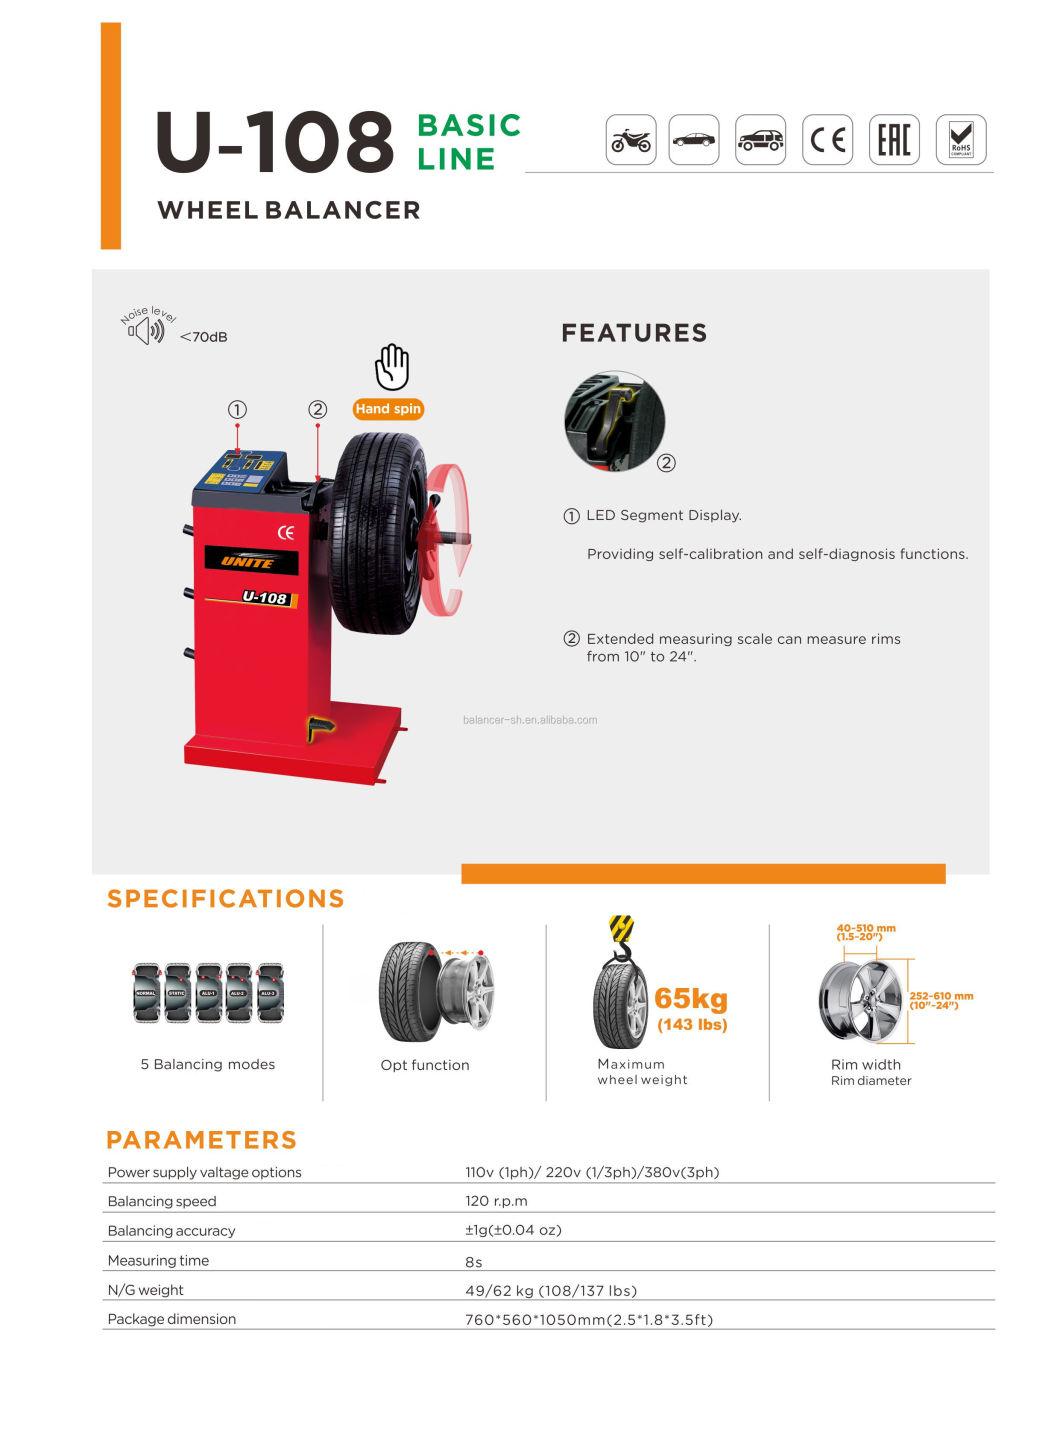 Unite Basic Hand Spin Wheel Balancer Lower Price Wheel Balancing Machine for Car Repair Shop U-108